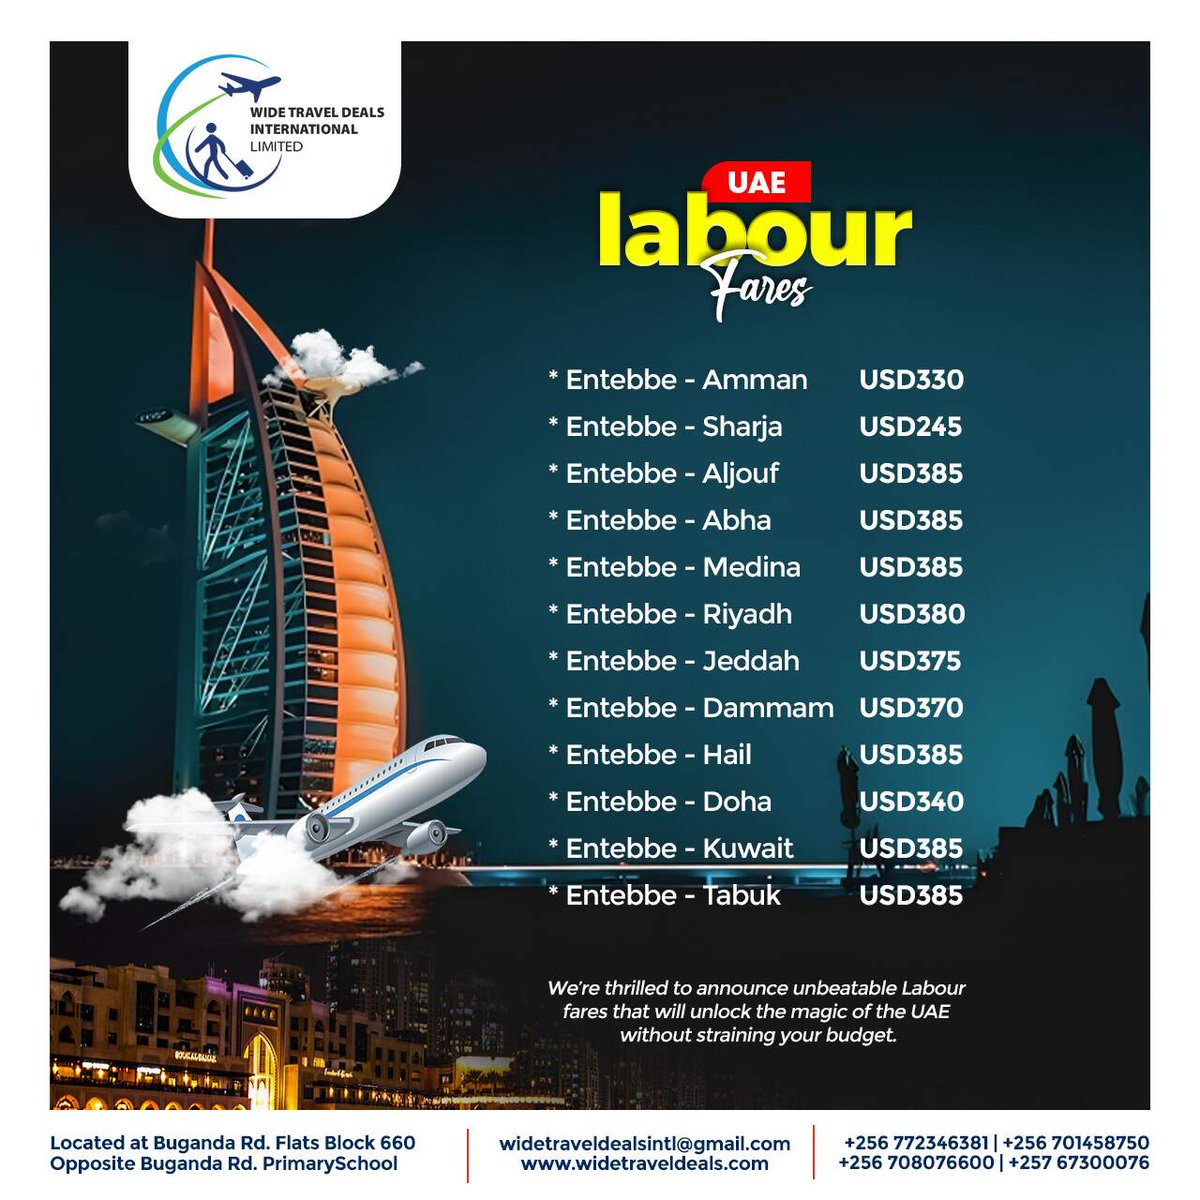 Hey💙
Cheap & Affordable labour fares to the UAE❤✈

#travel #amazingdiscounts #affordable #balunywa #FreeMyPassport #azawi #Sugar #kikuyu #UAE #mubs